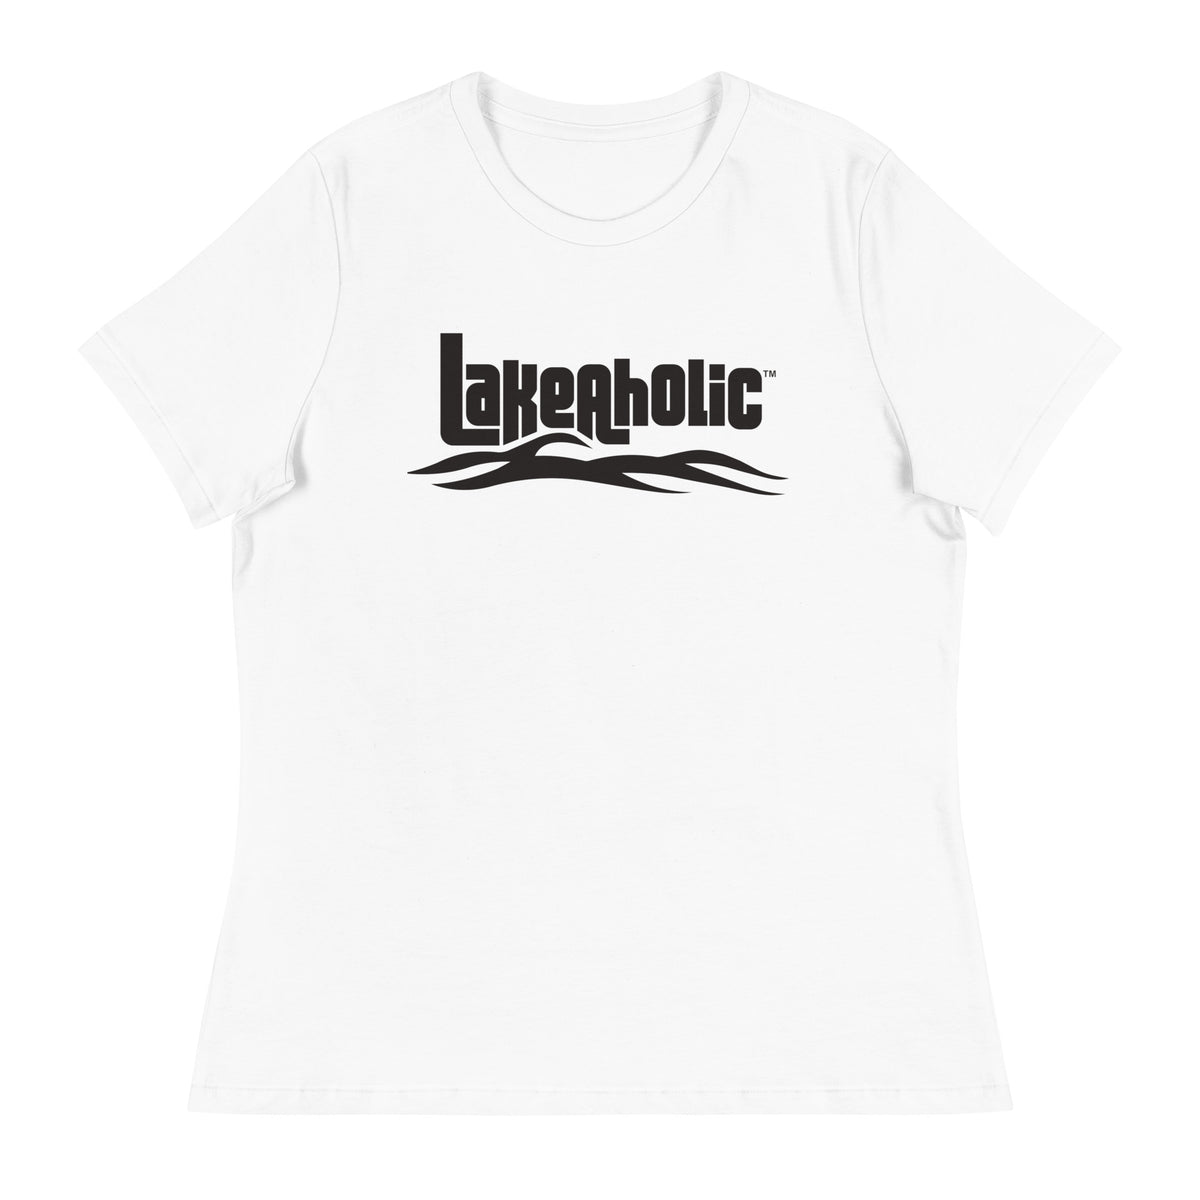 Lakeaholic Women's Relaxed T-Shirt